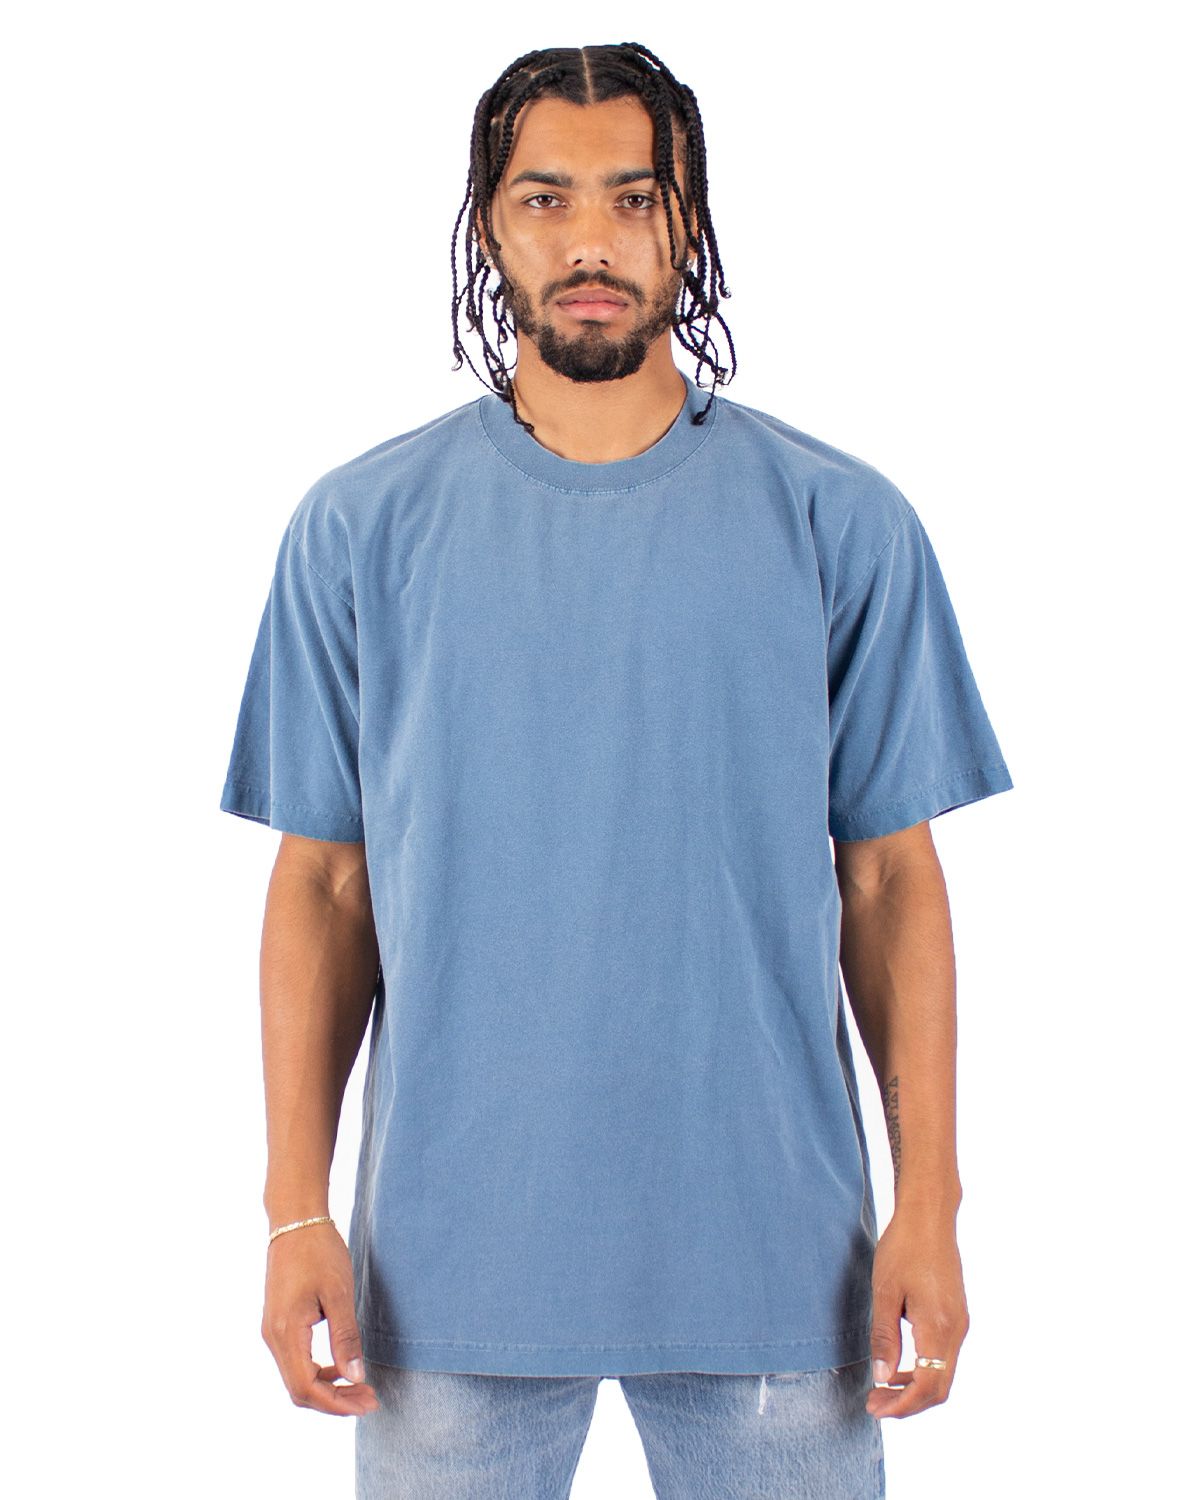 Shaka Wear Shgdz - Men's Garment Dye Double-Zip Hooded Sweatshirt Shadow - S